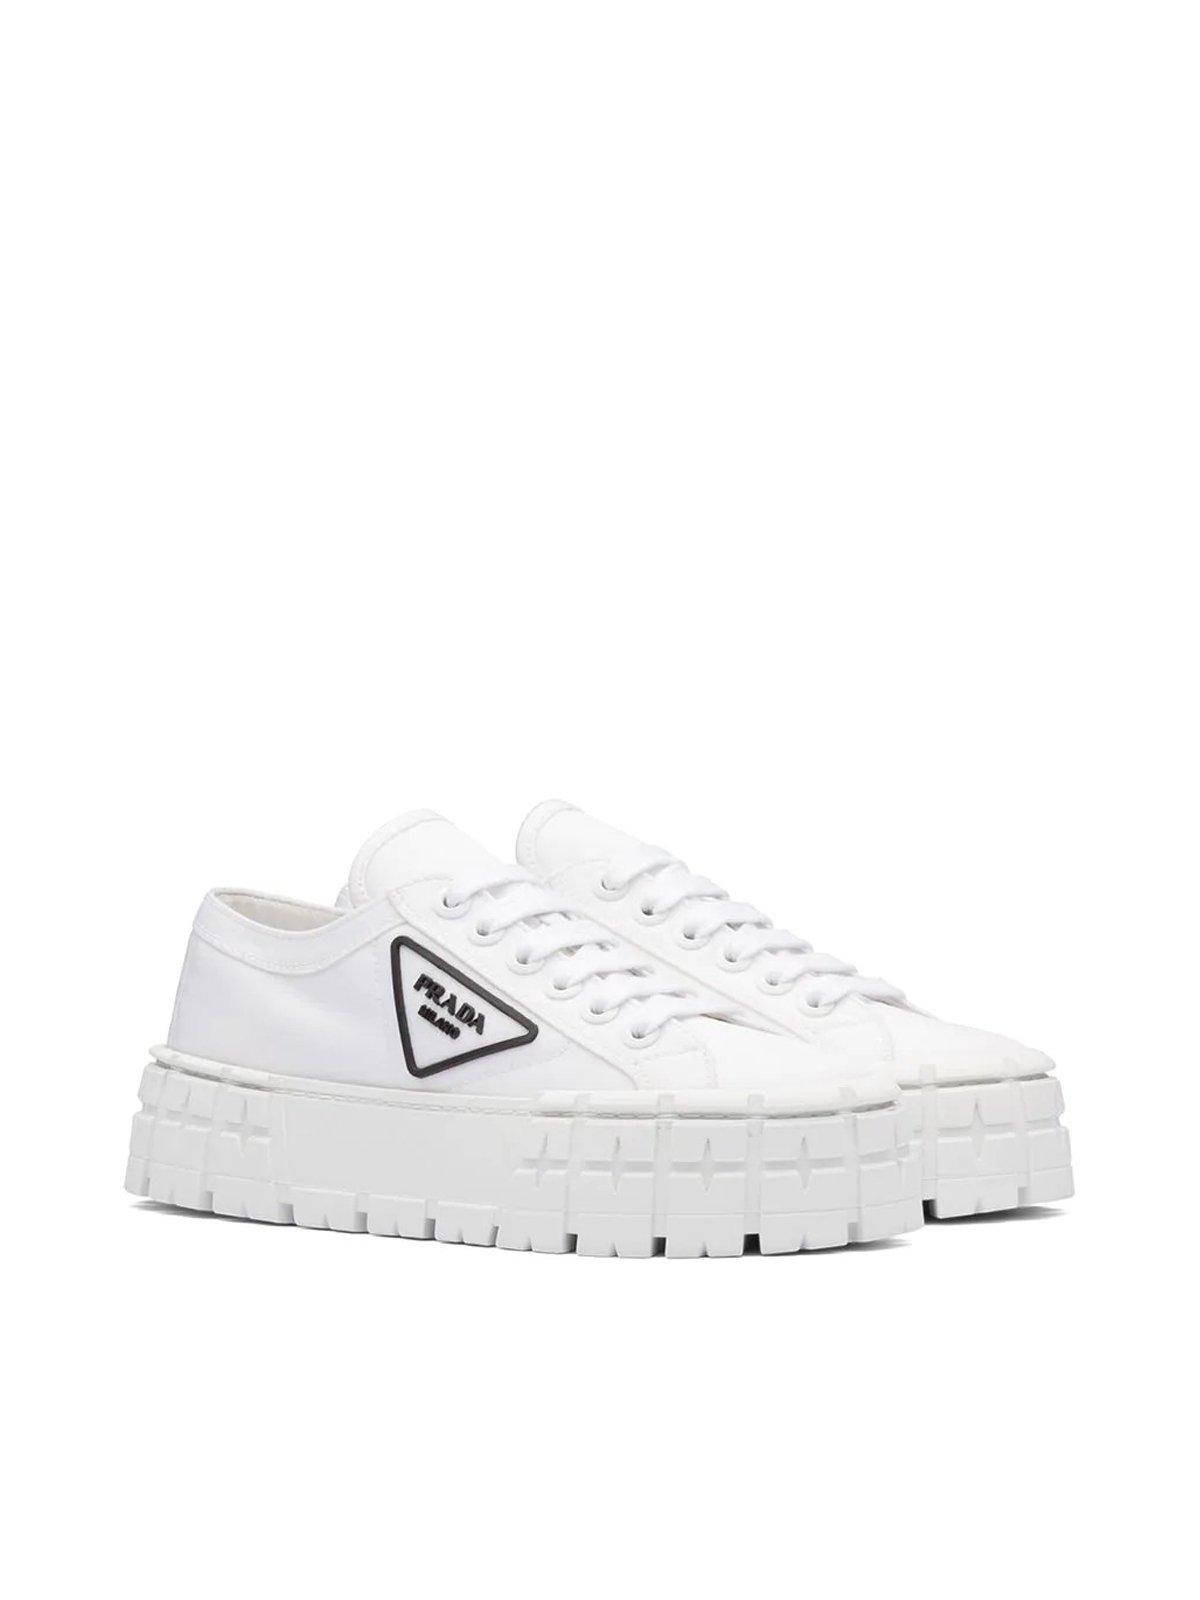 Prada Leather Gabardine Sneakers White - Save 47% | Lyst